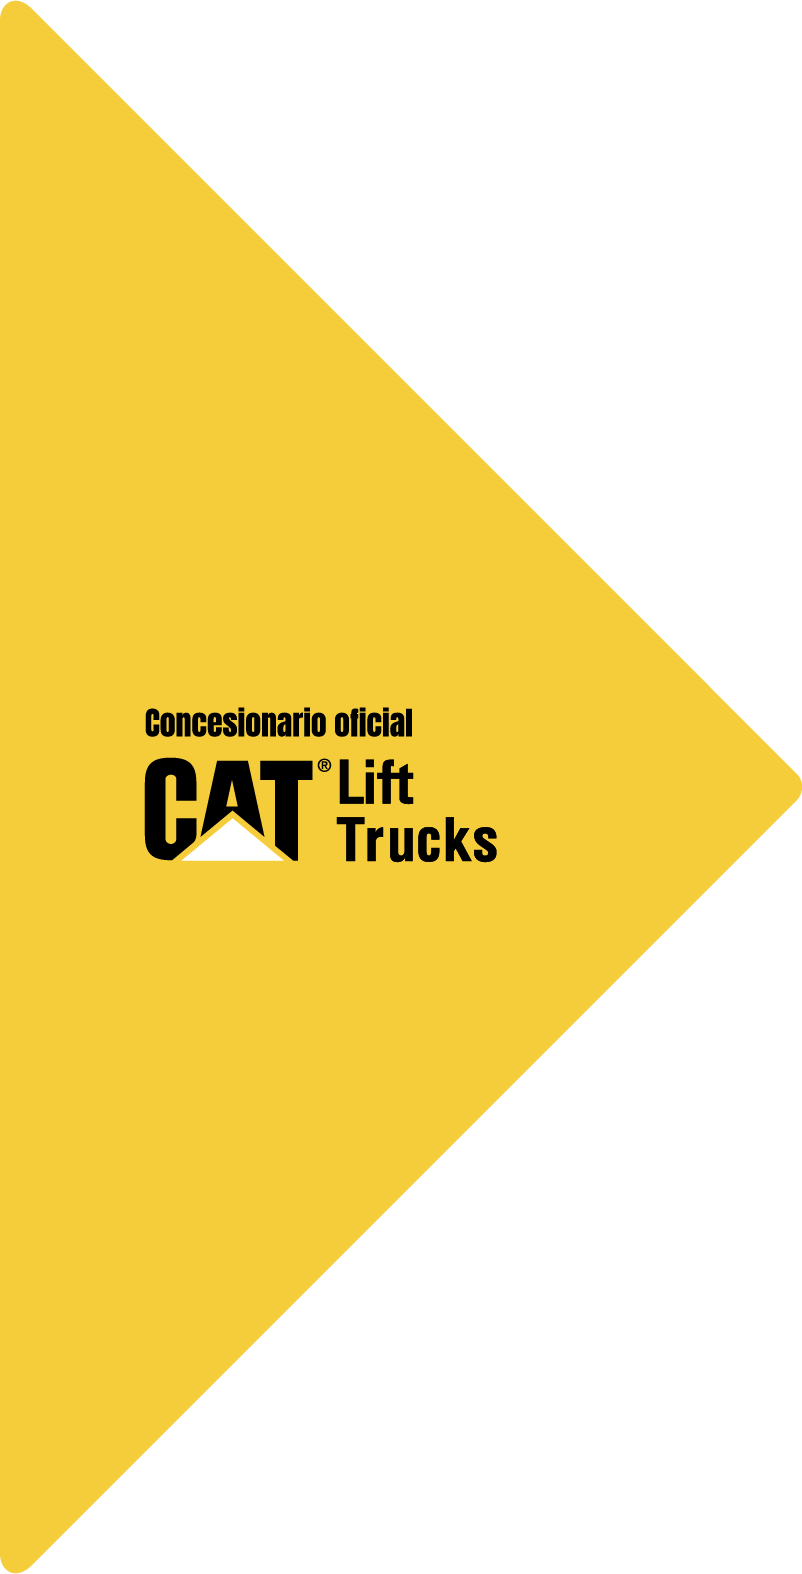 Fondo triangular con logo de concesionario oficial CAT Lift Trucks